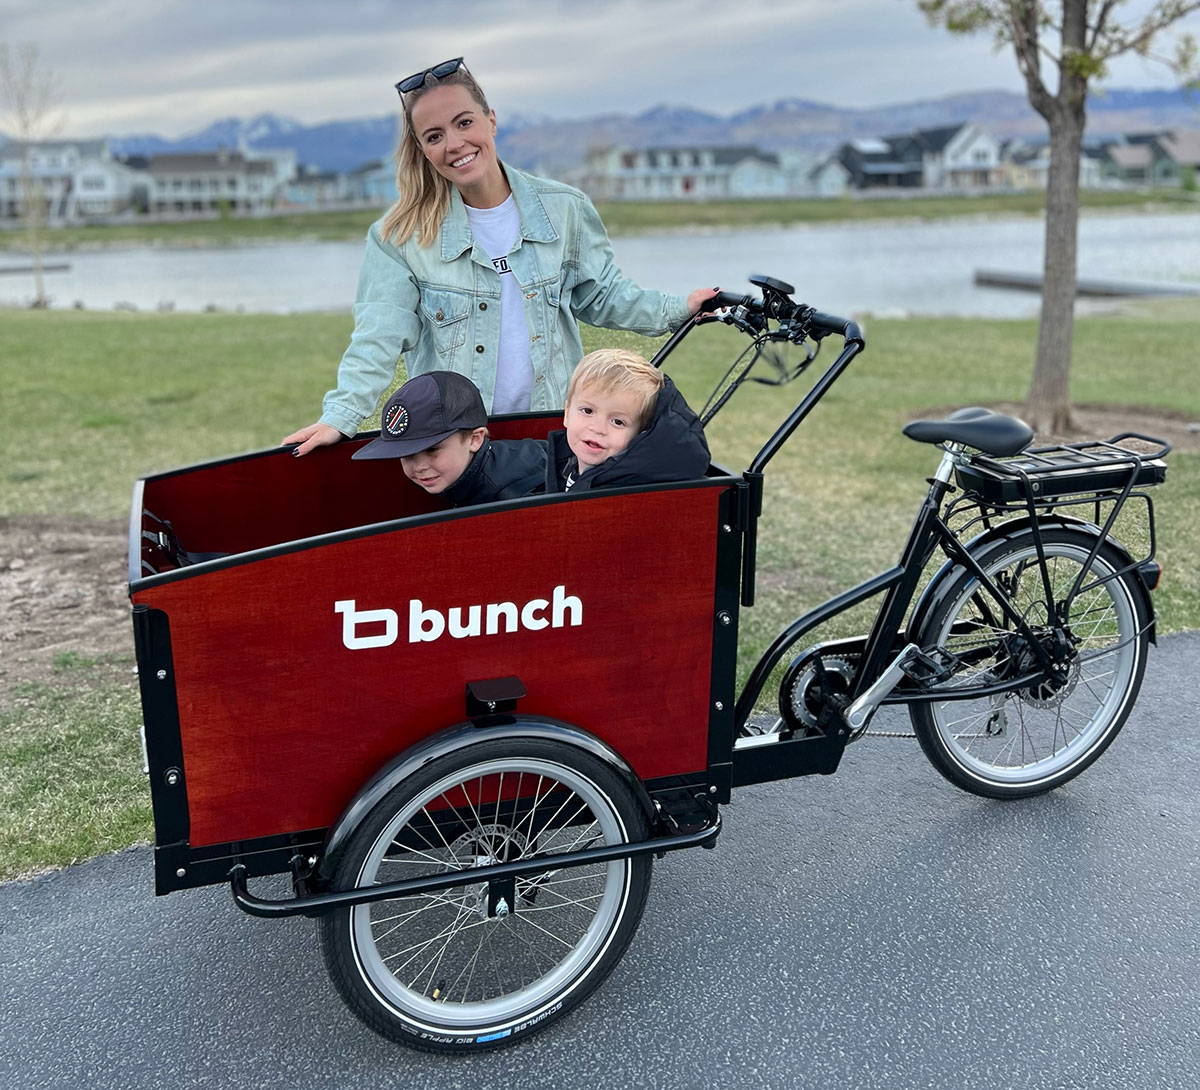 Bunch Bikes The Original Electric Cargo Bike